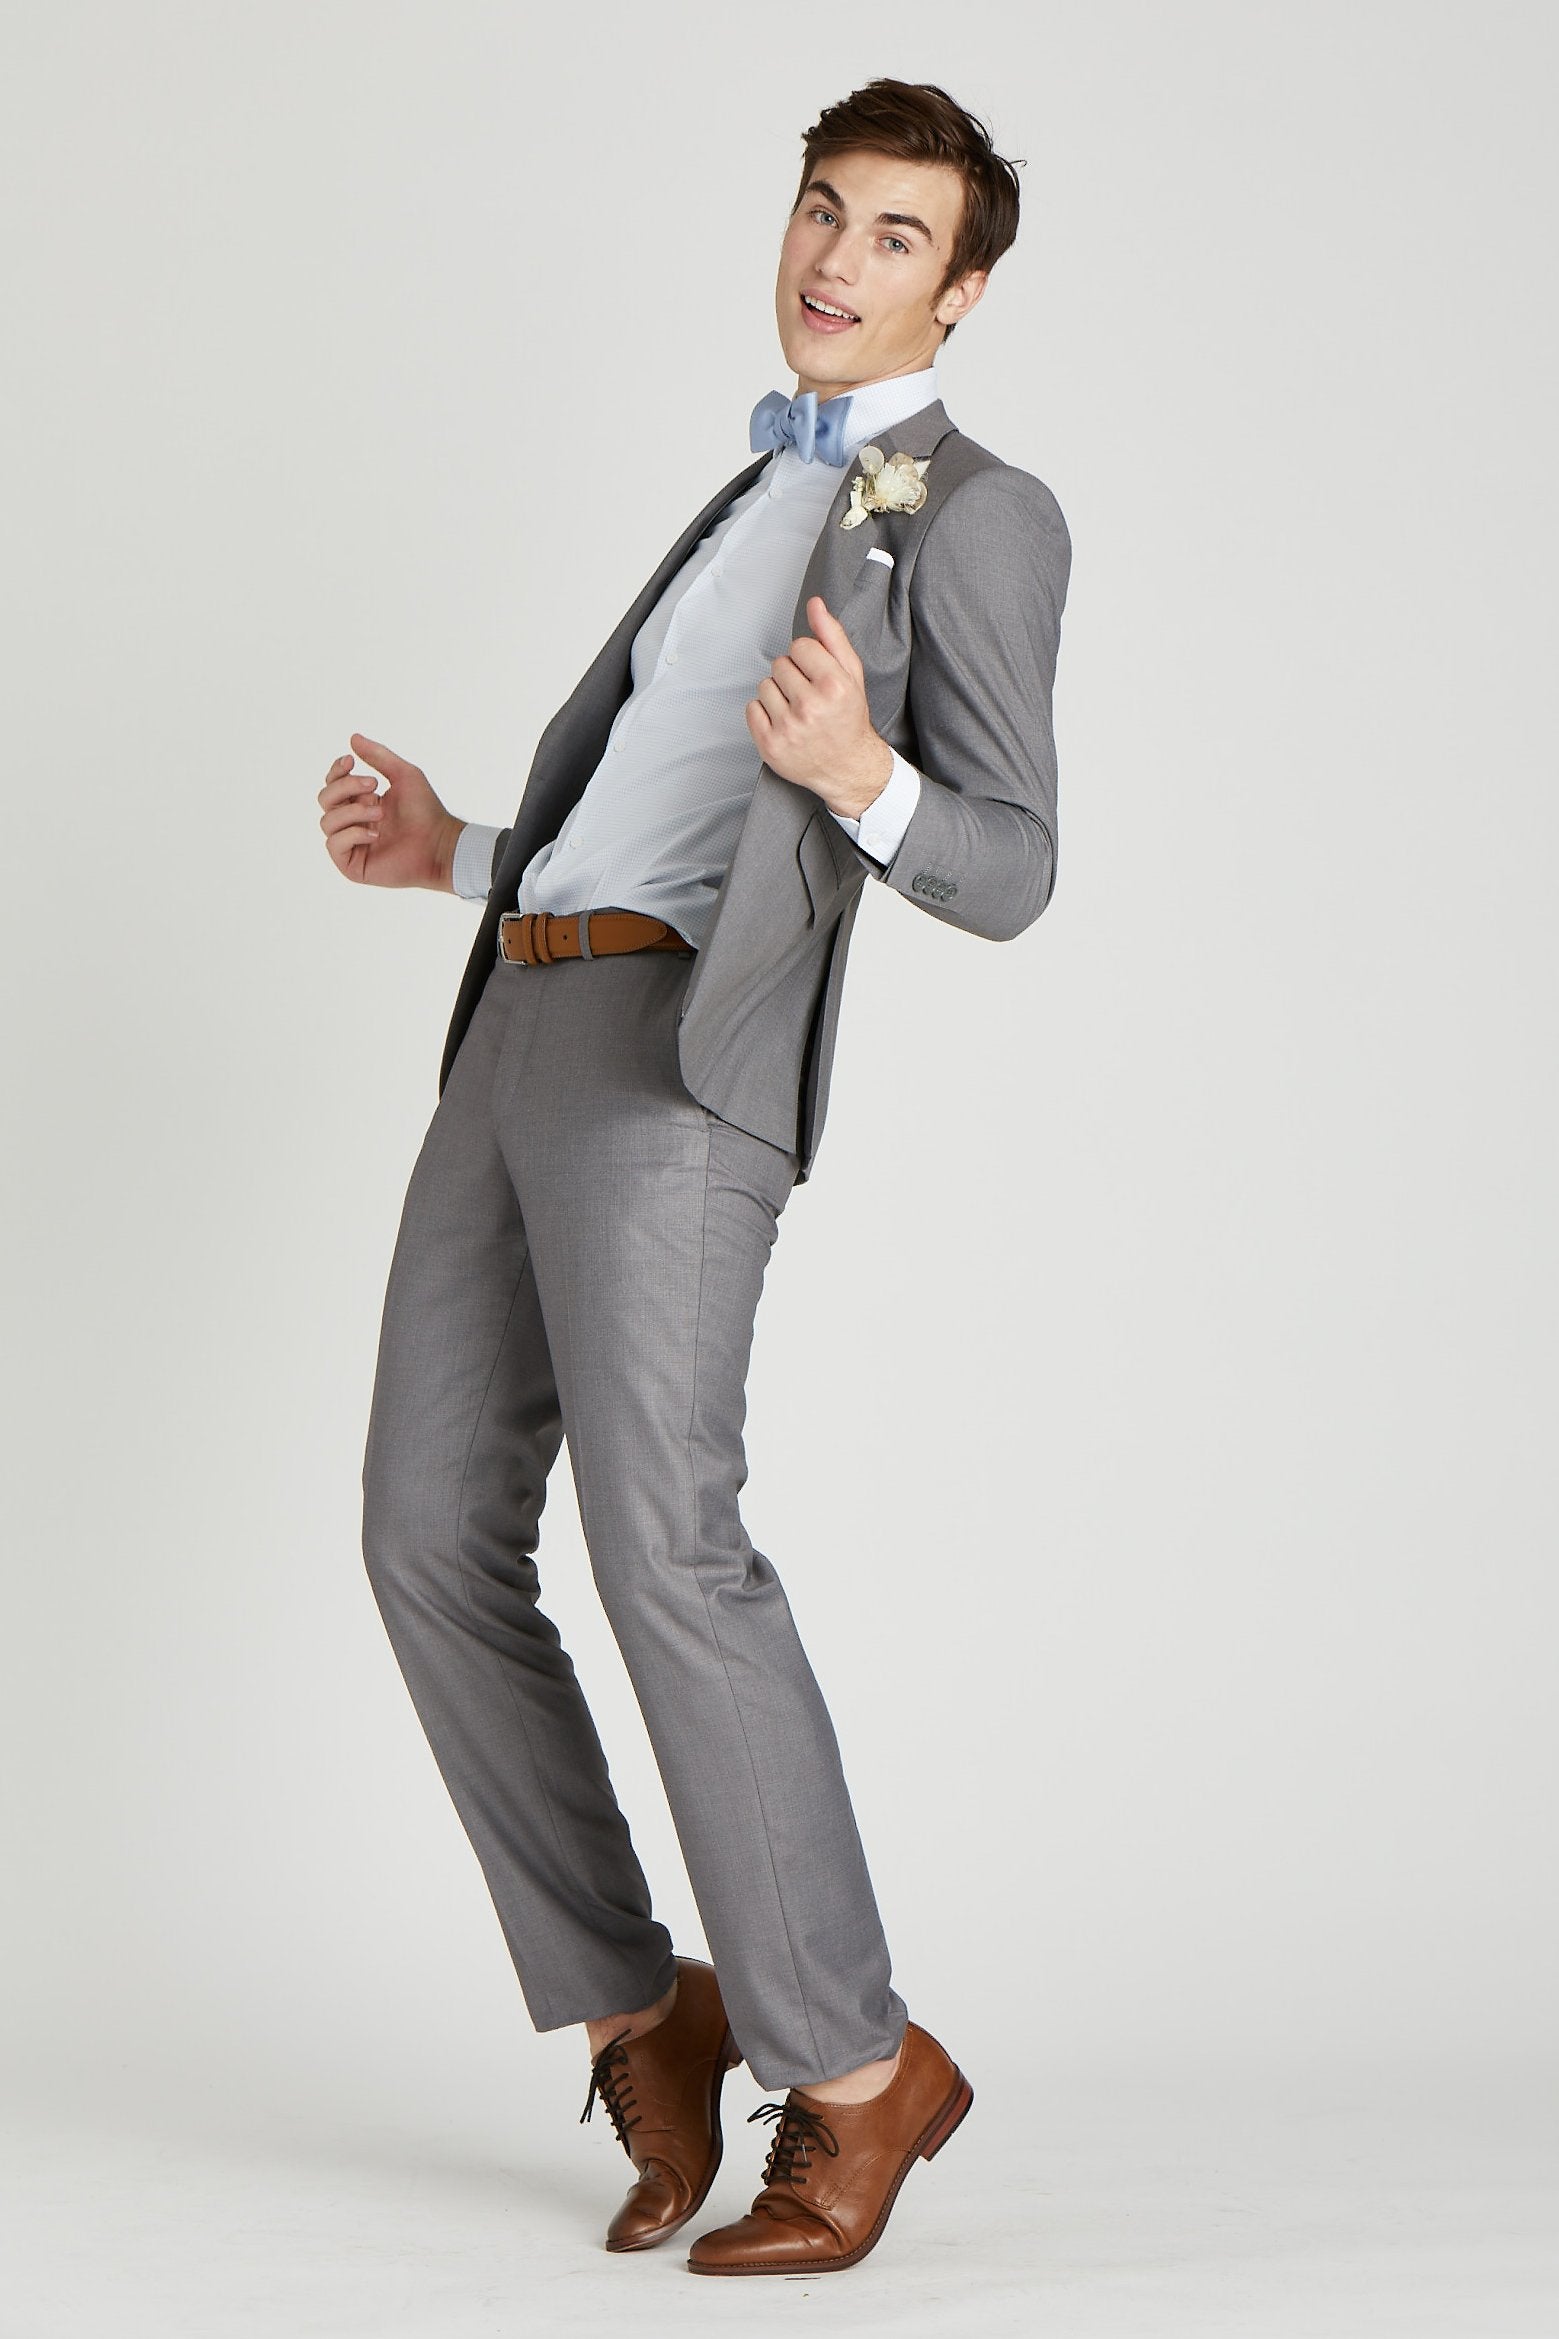 Daniel Bow Tie in dusty blue by Birdy Grey, front view